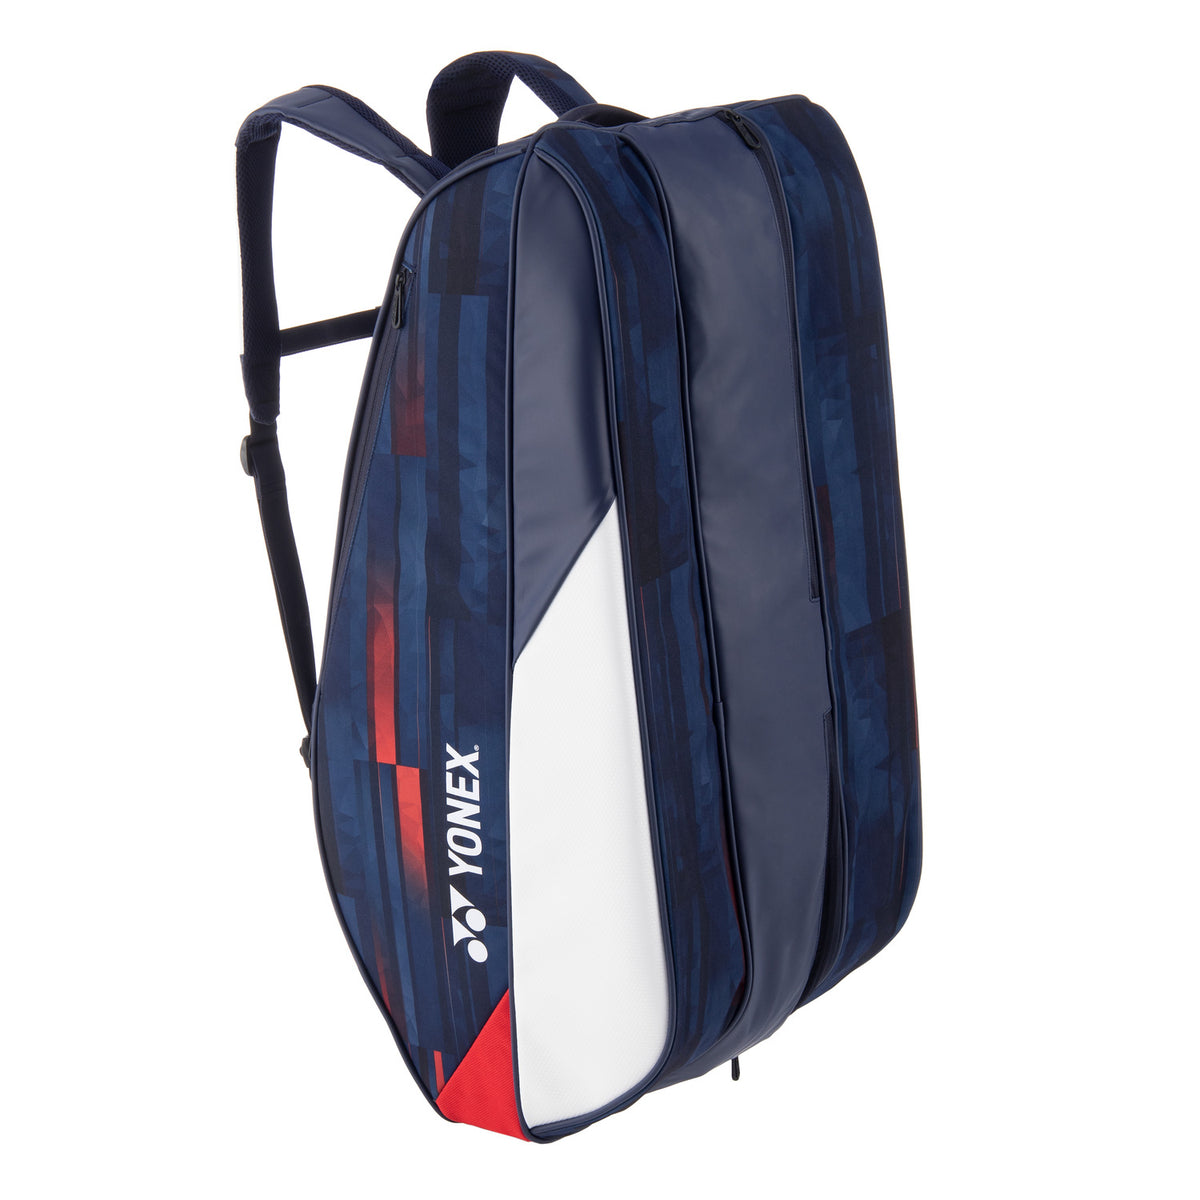 Yonex BA29PAEX Limited Pro Racket Bag (9PCS) TRICOLORE White/Navy/Red